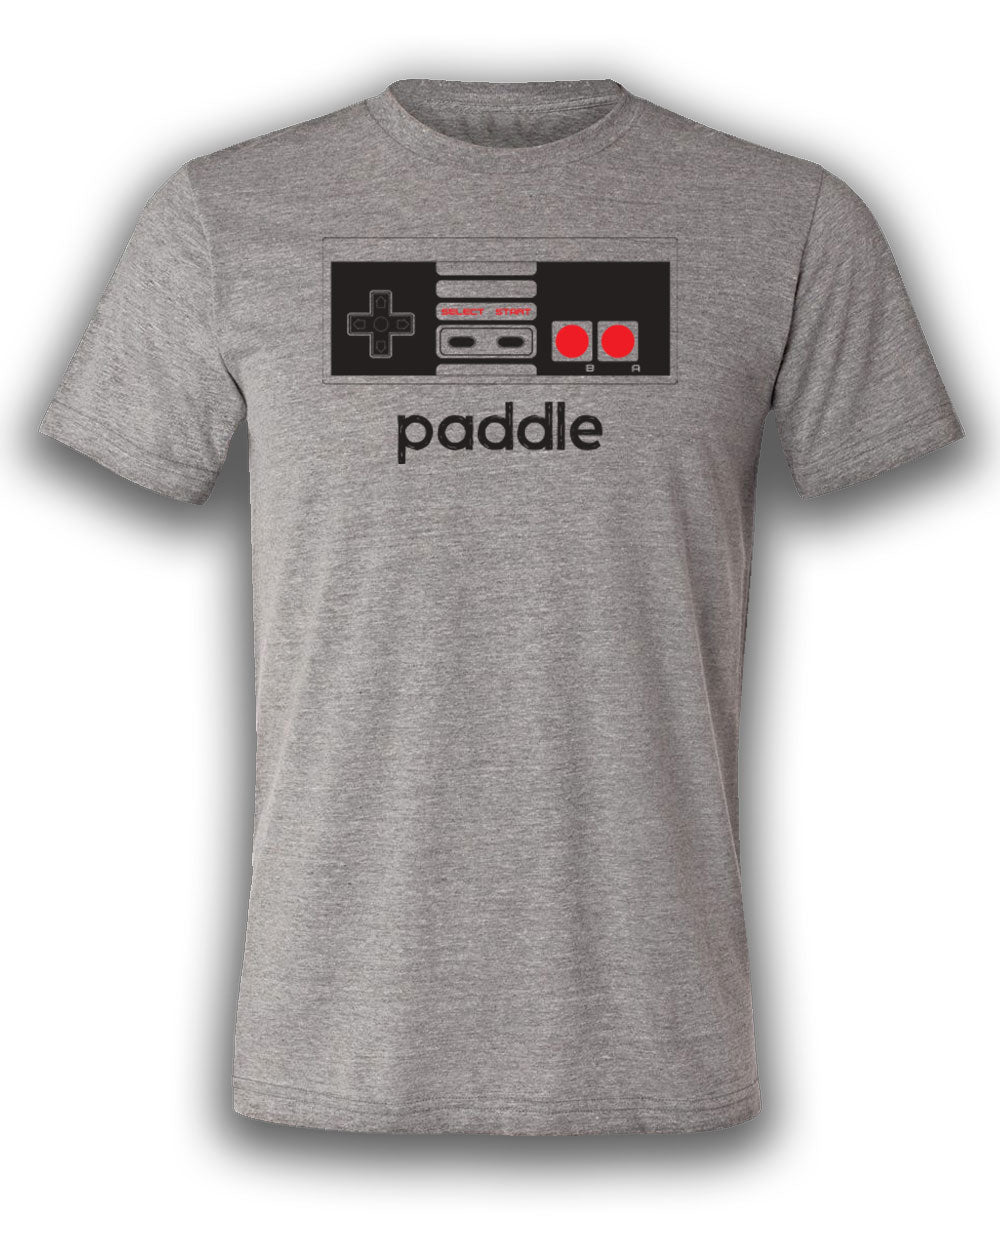 Paddle T-shirt